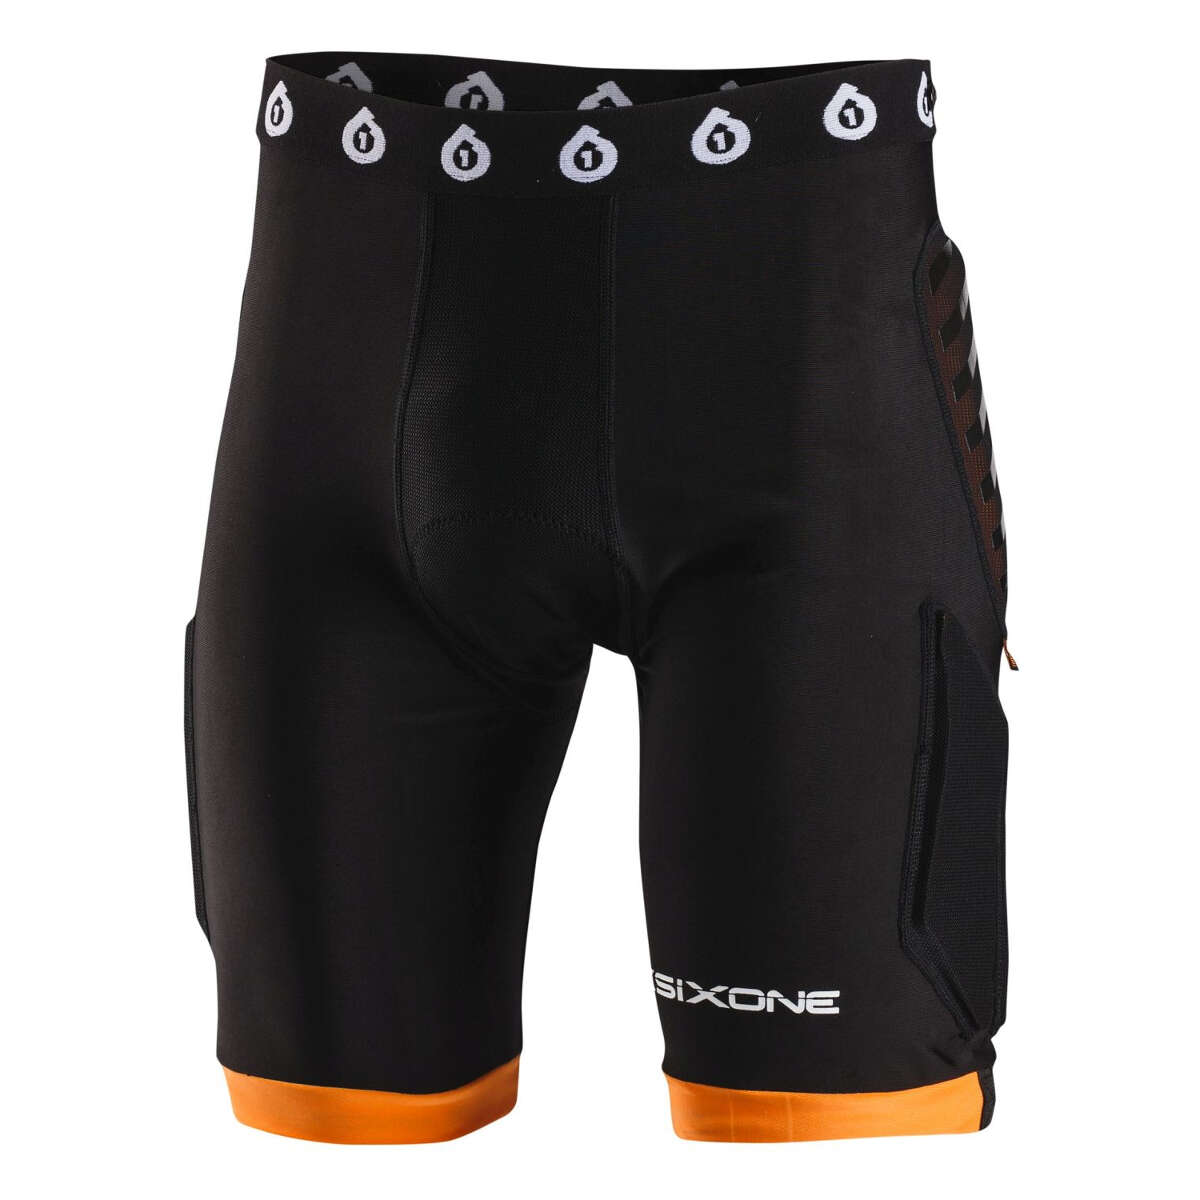 SixSixOne Sous-Shorts de Protection EVO Compression Chamois - Black